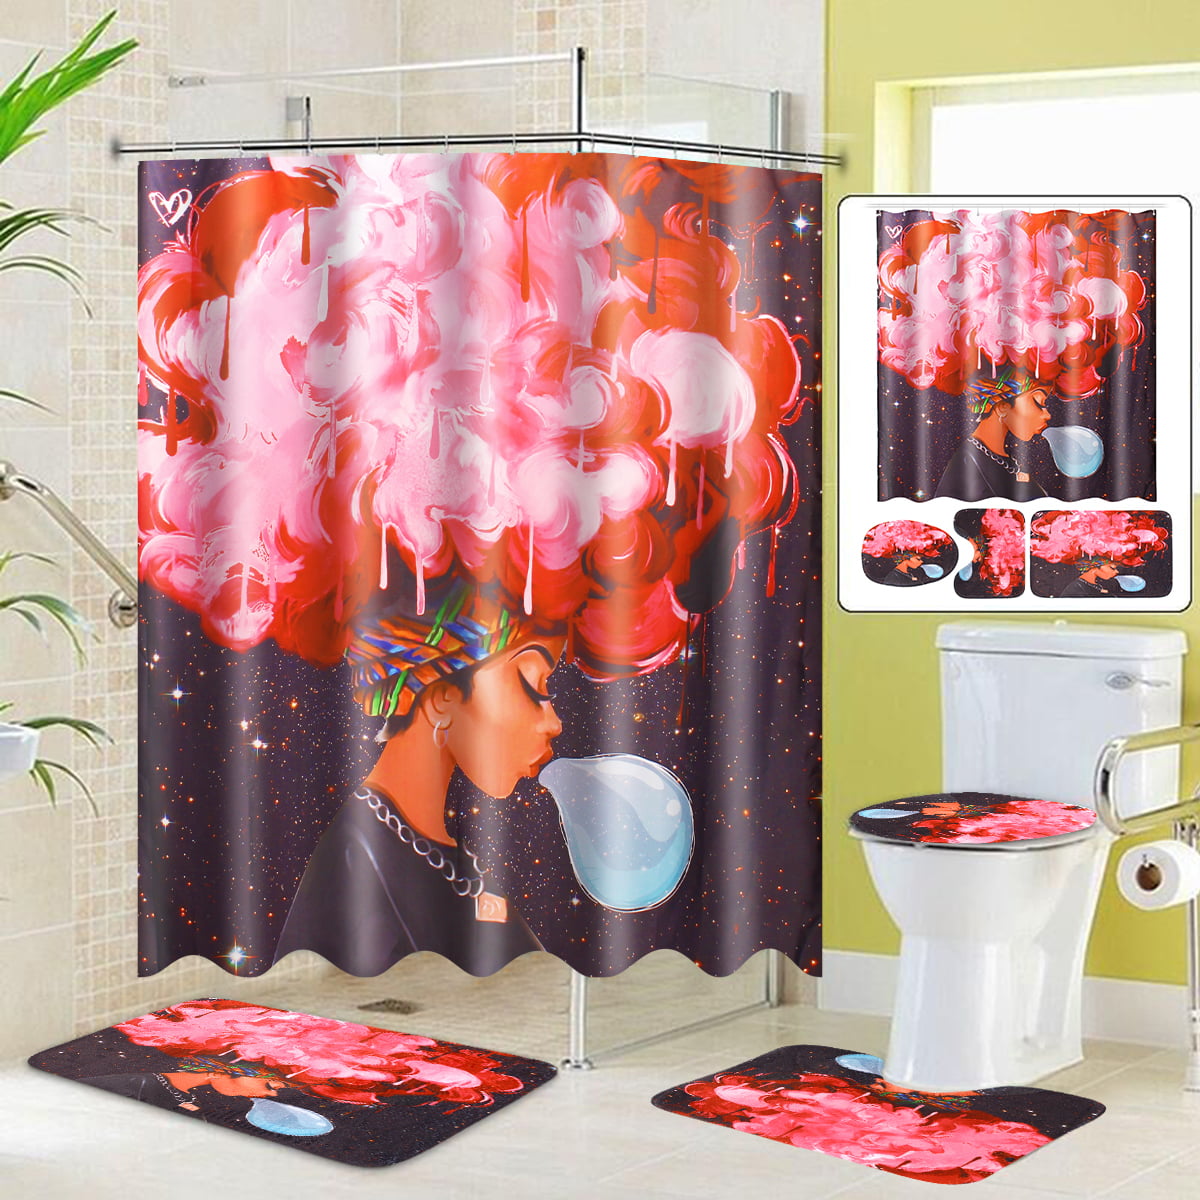 4Pcs Bathroom Shower Curtain Toilet Seat Cover Mat Non-Slip Pedestal Rug Set 